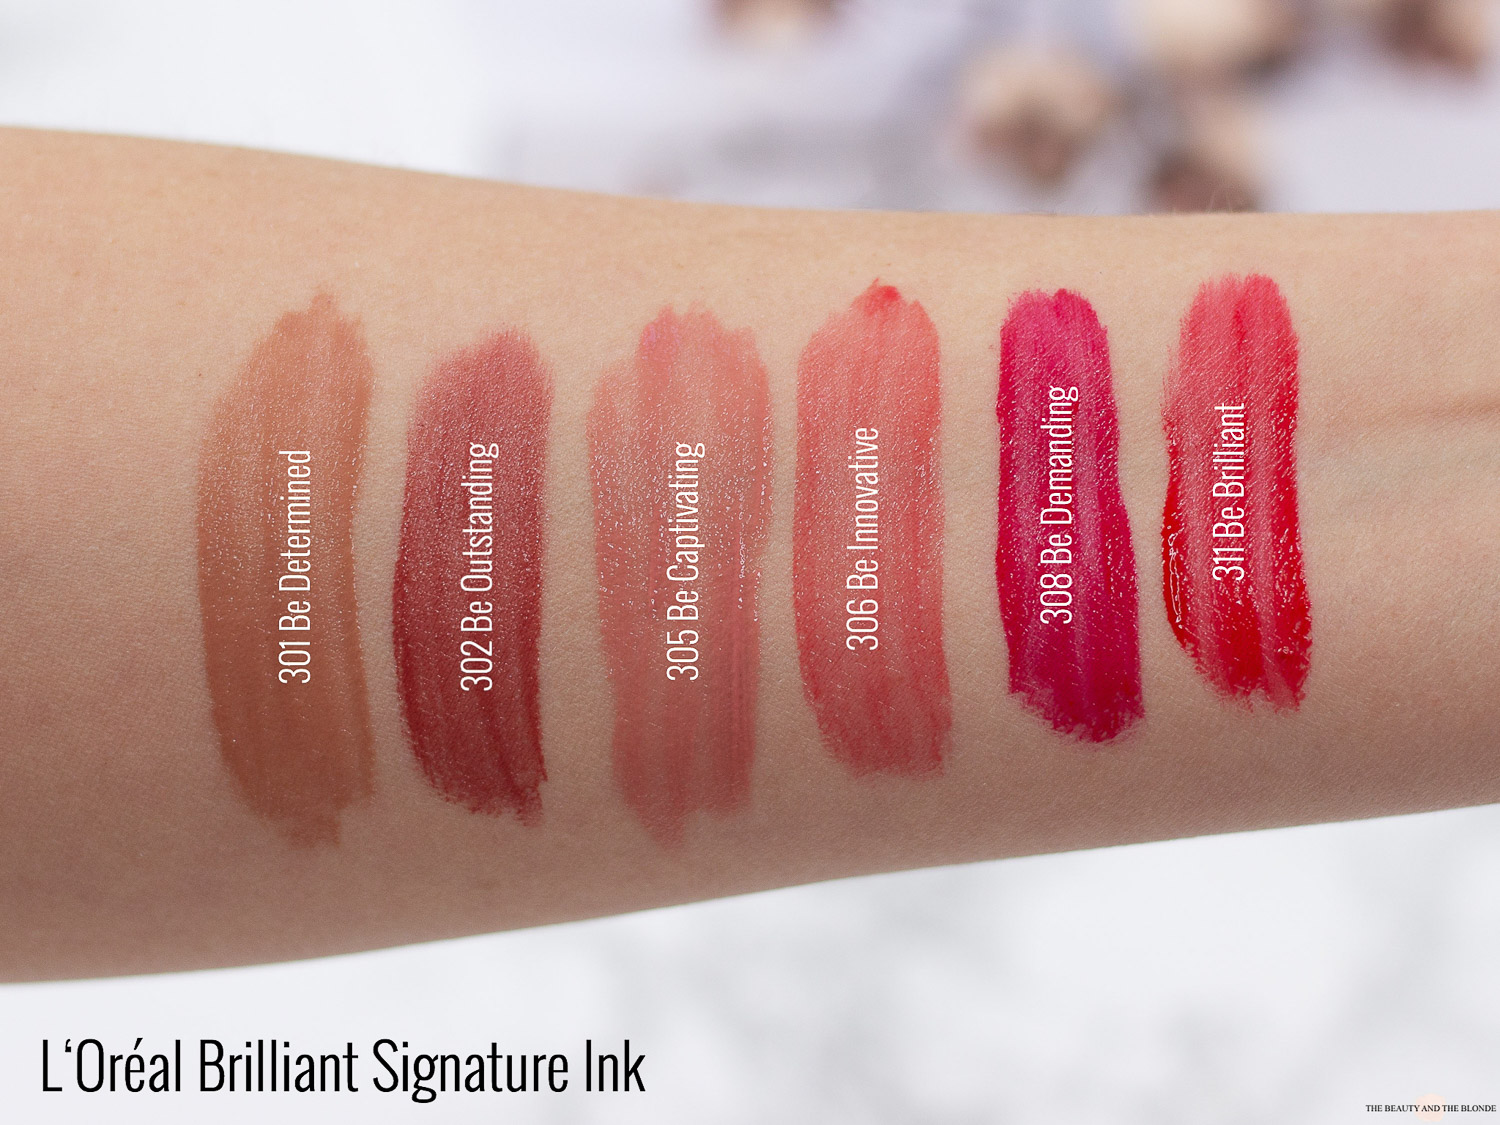 L'Oréal Brilliant Signature Ink Lippenstift Review Swatches